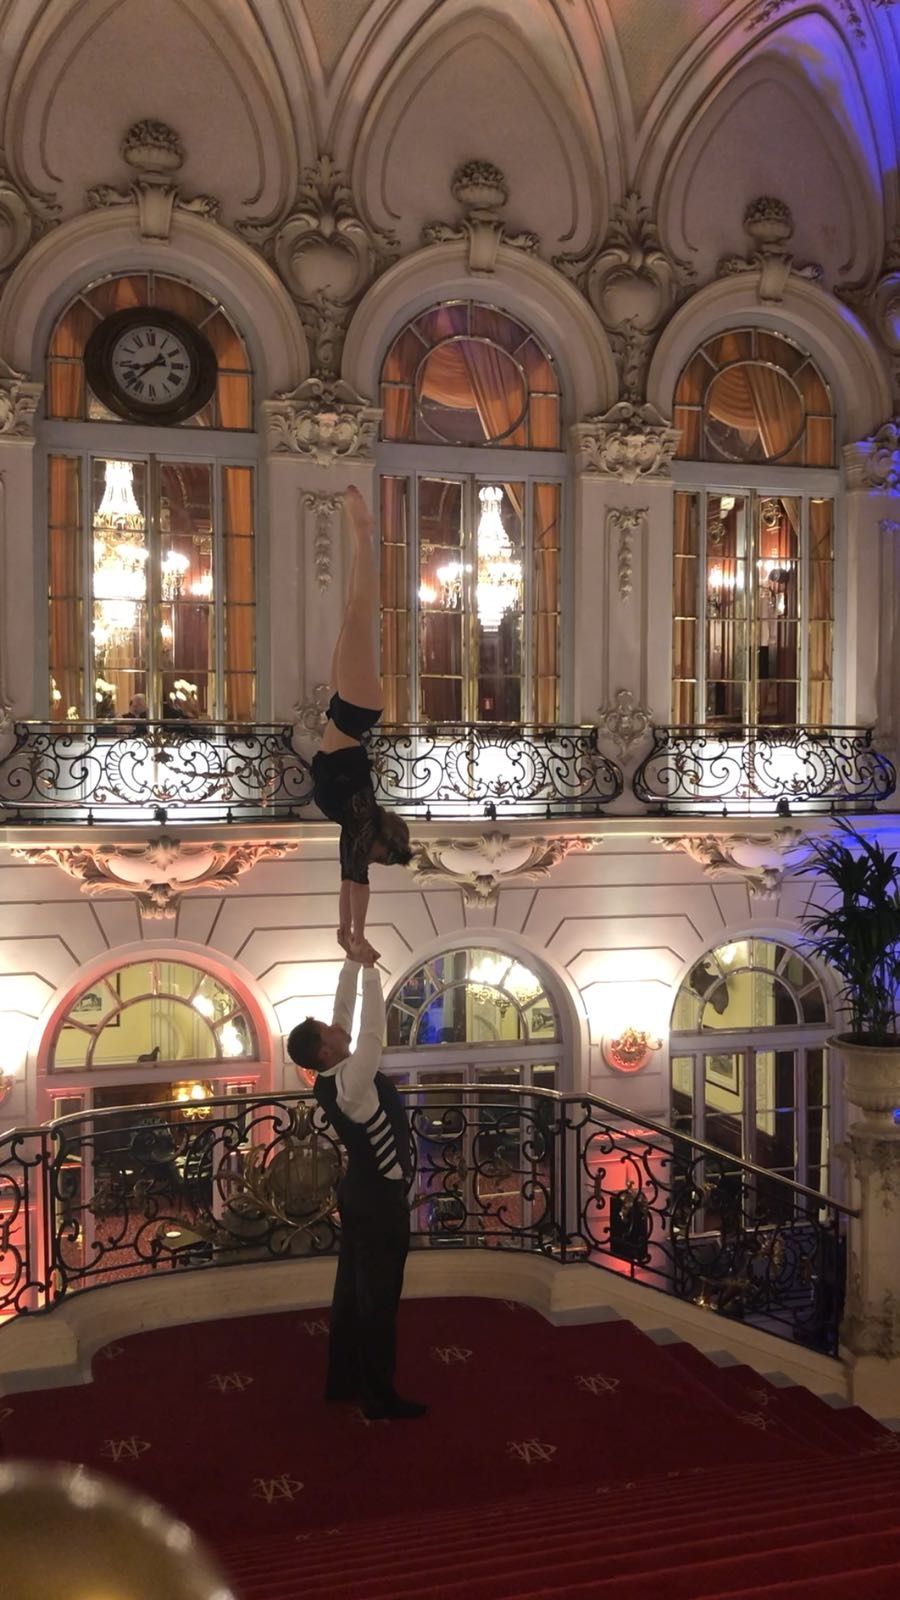 Dancem's acrobats at the Casino de Madrid